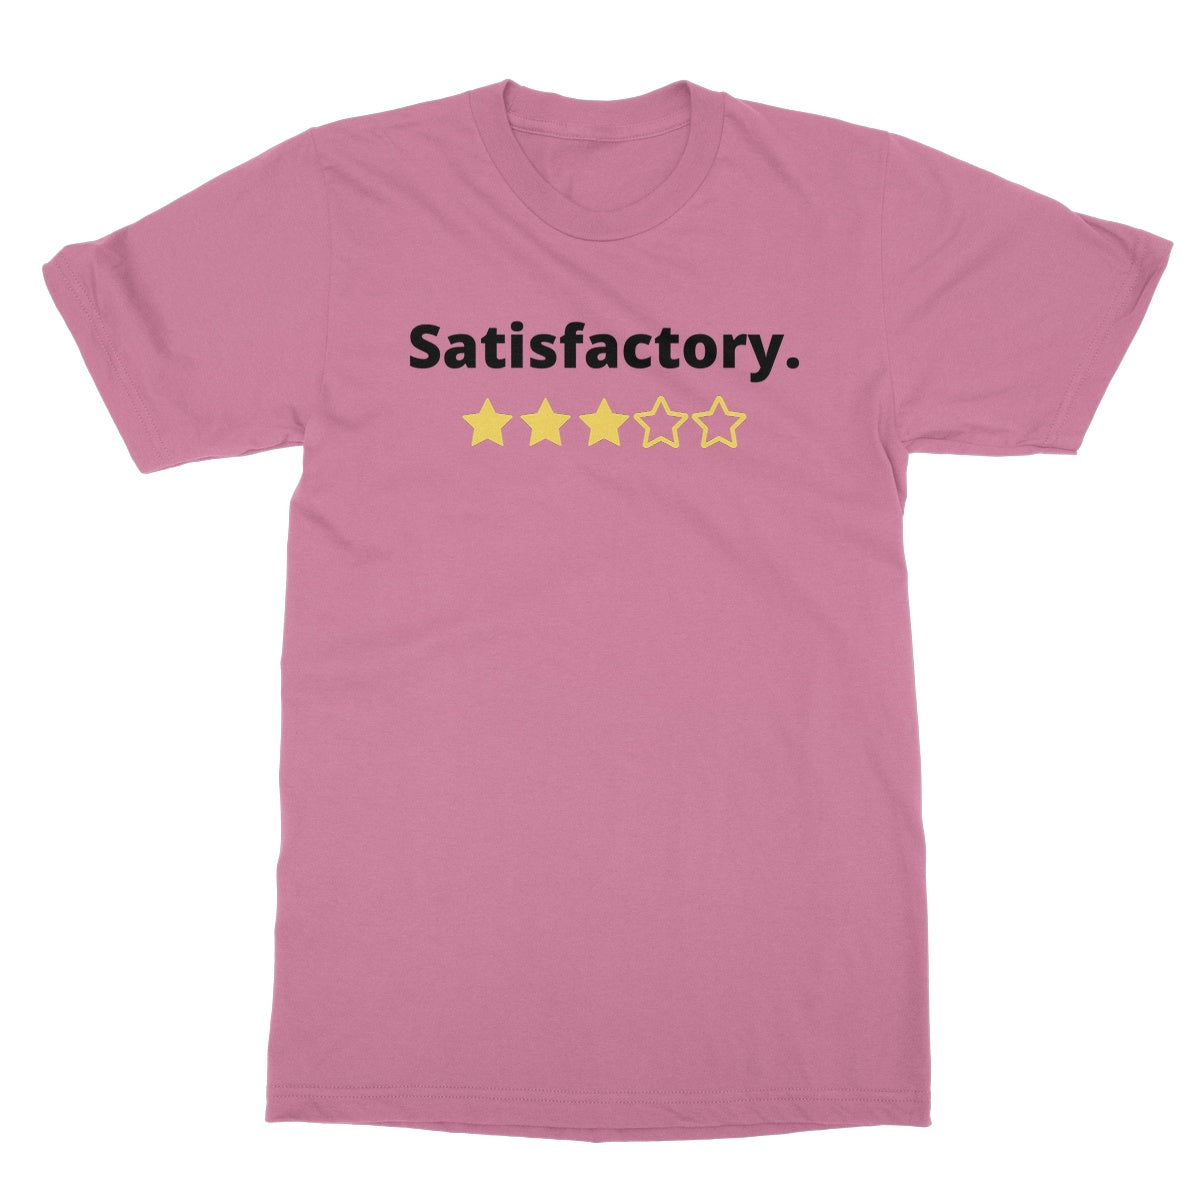 satisfactory t shirt pink